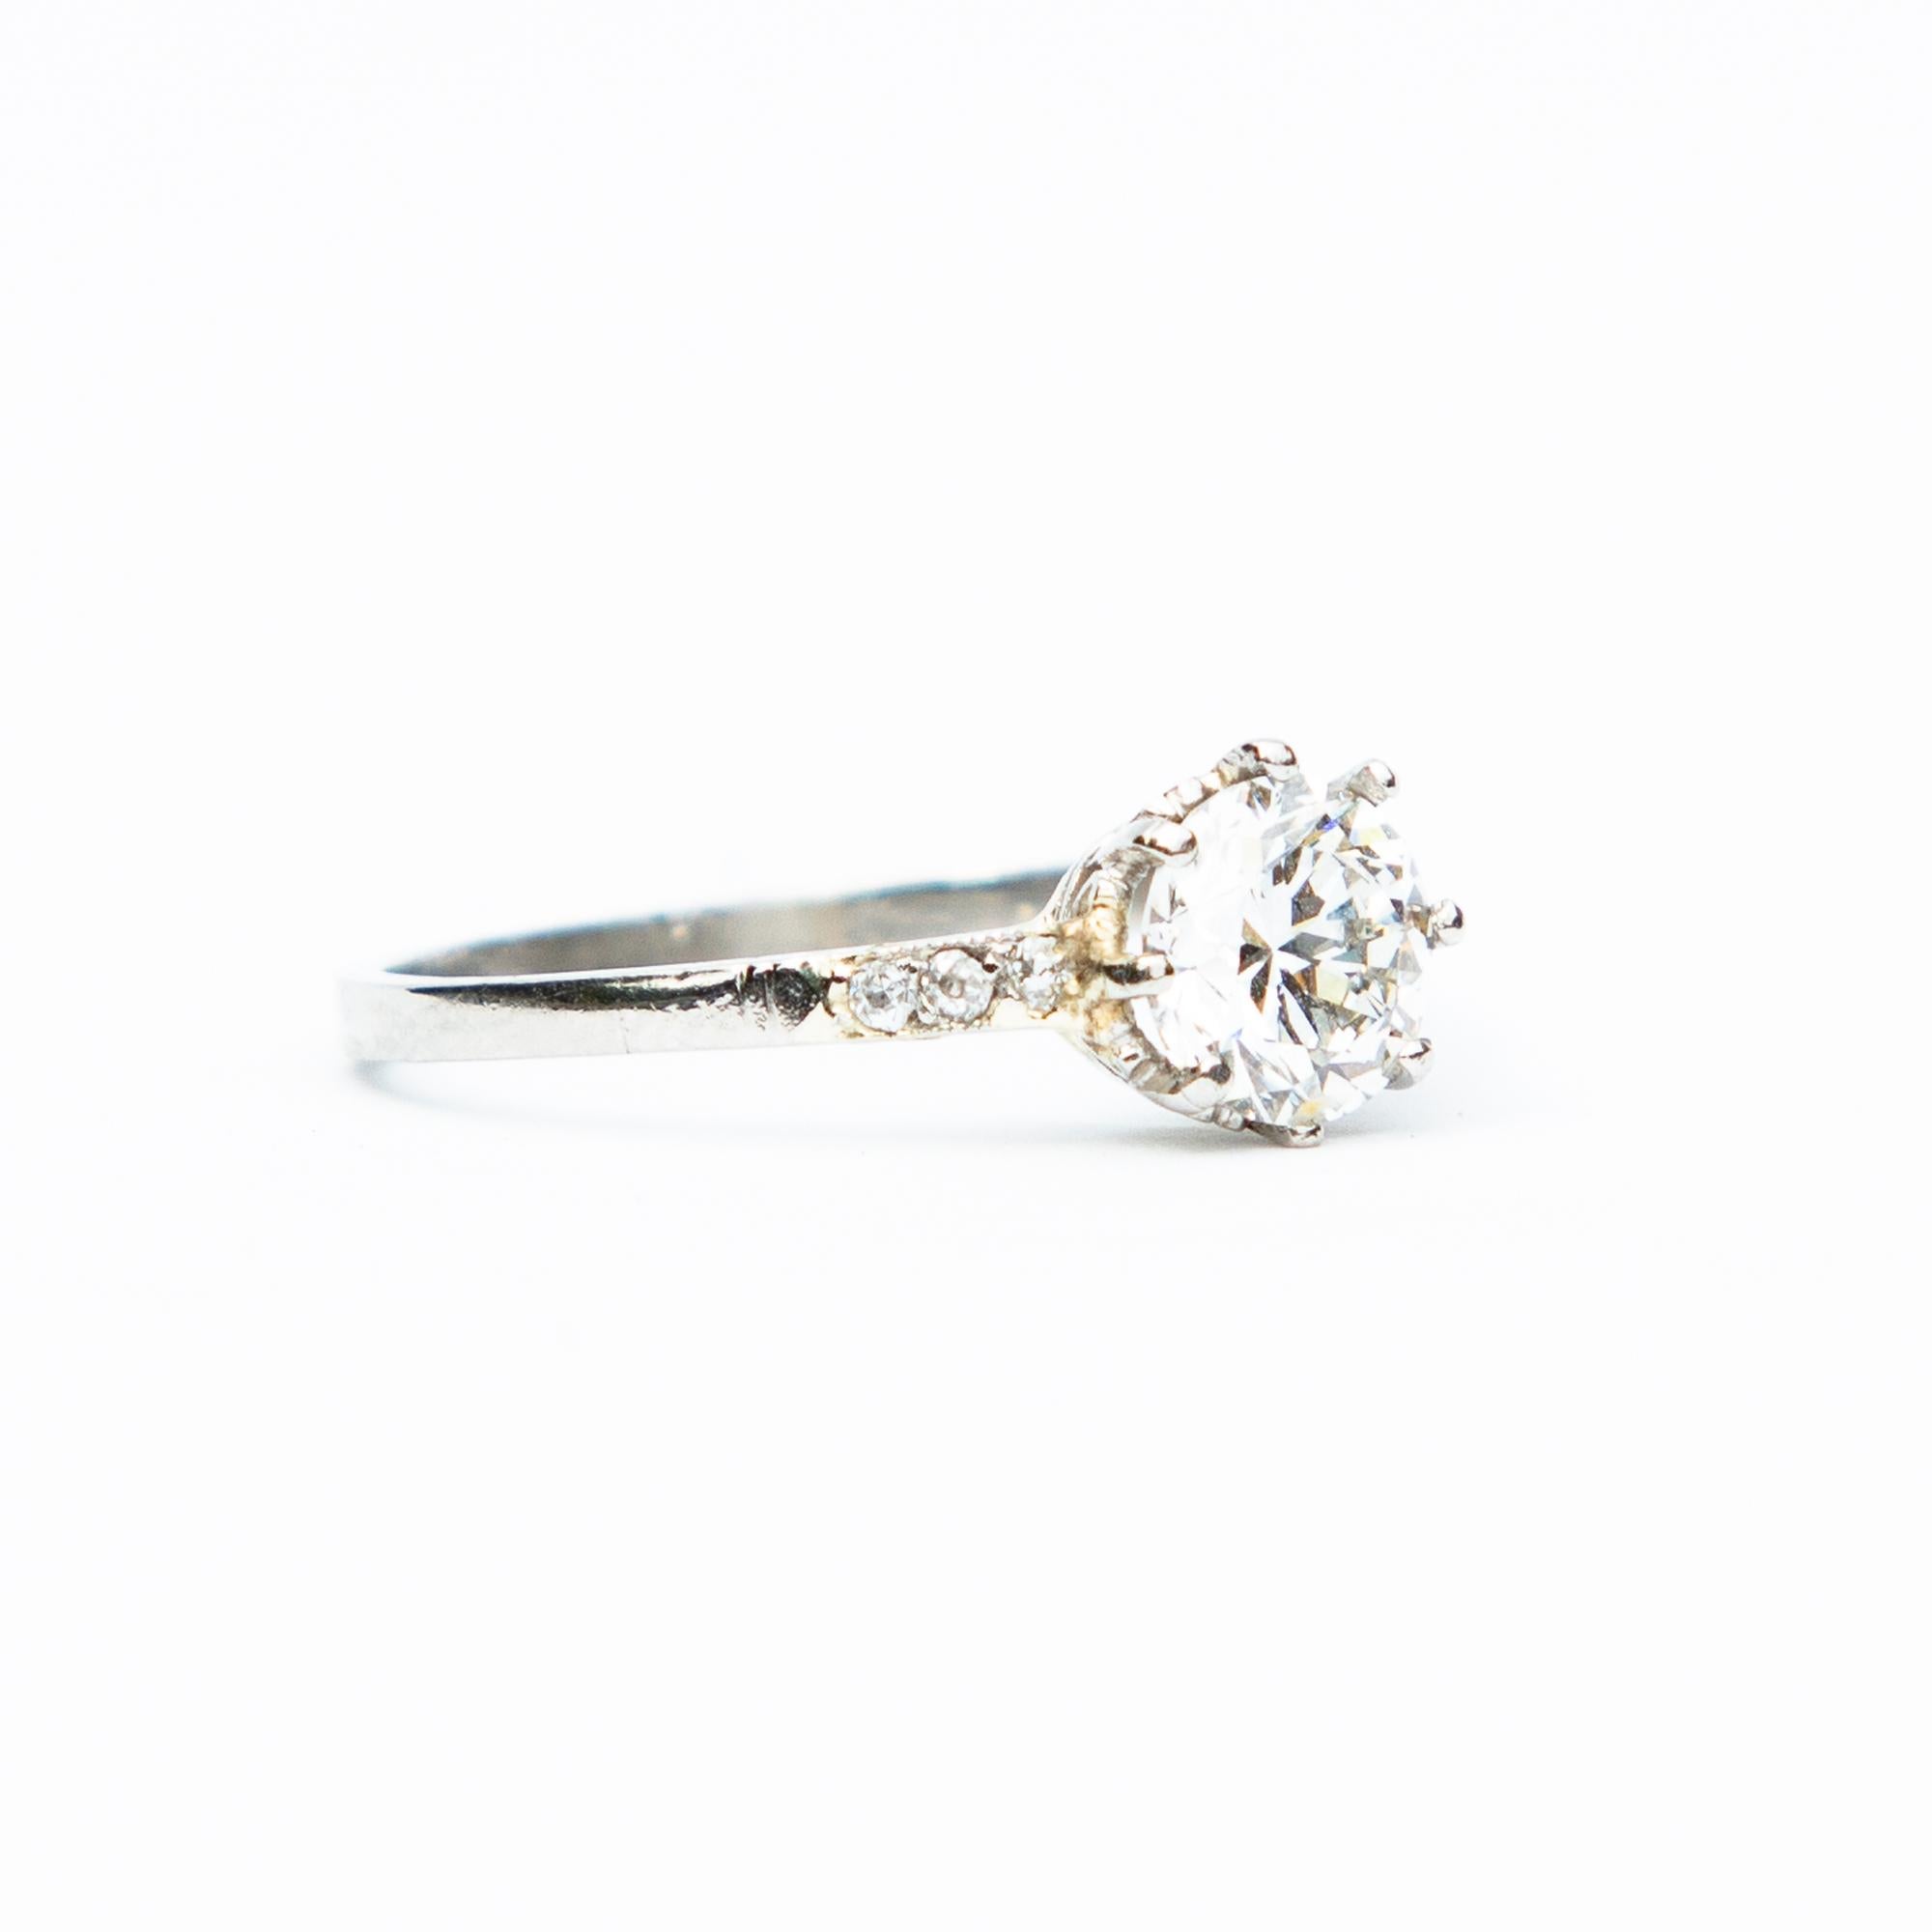 Old European Cut Art Deco Diamond Solitaire 18 Karat White Gold Engagement Ring